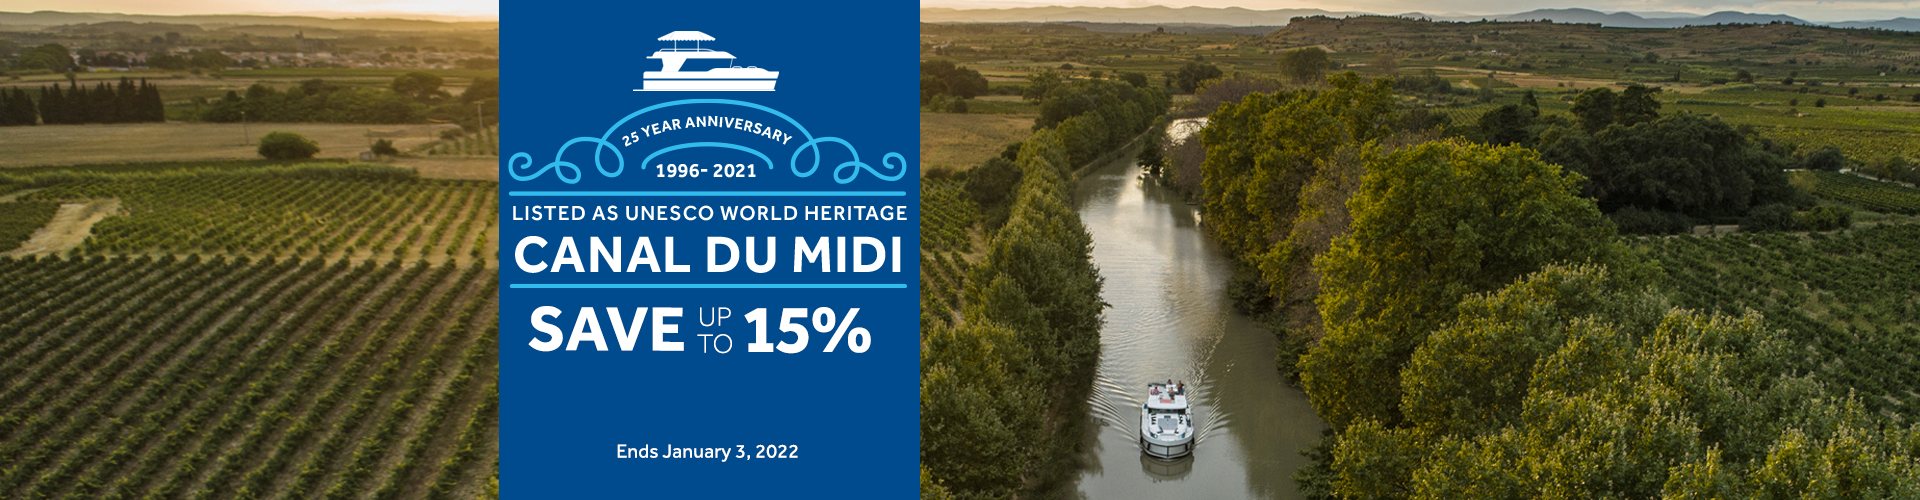 Canal du Midi 25th Anniversary